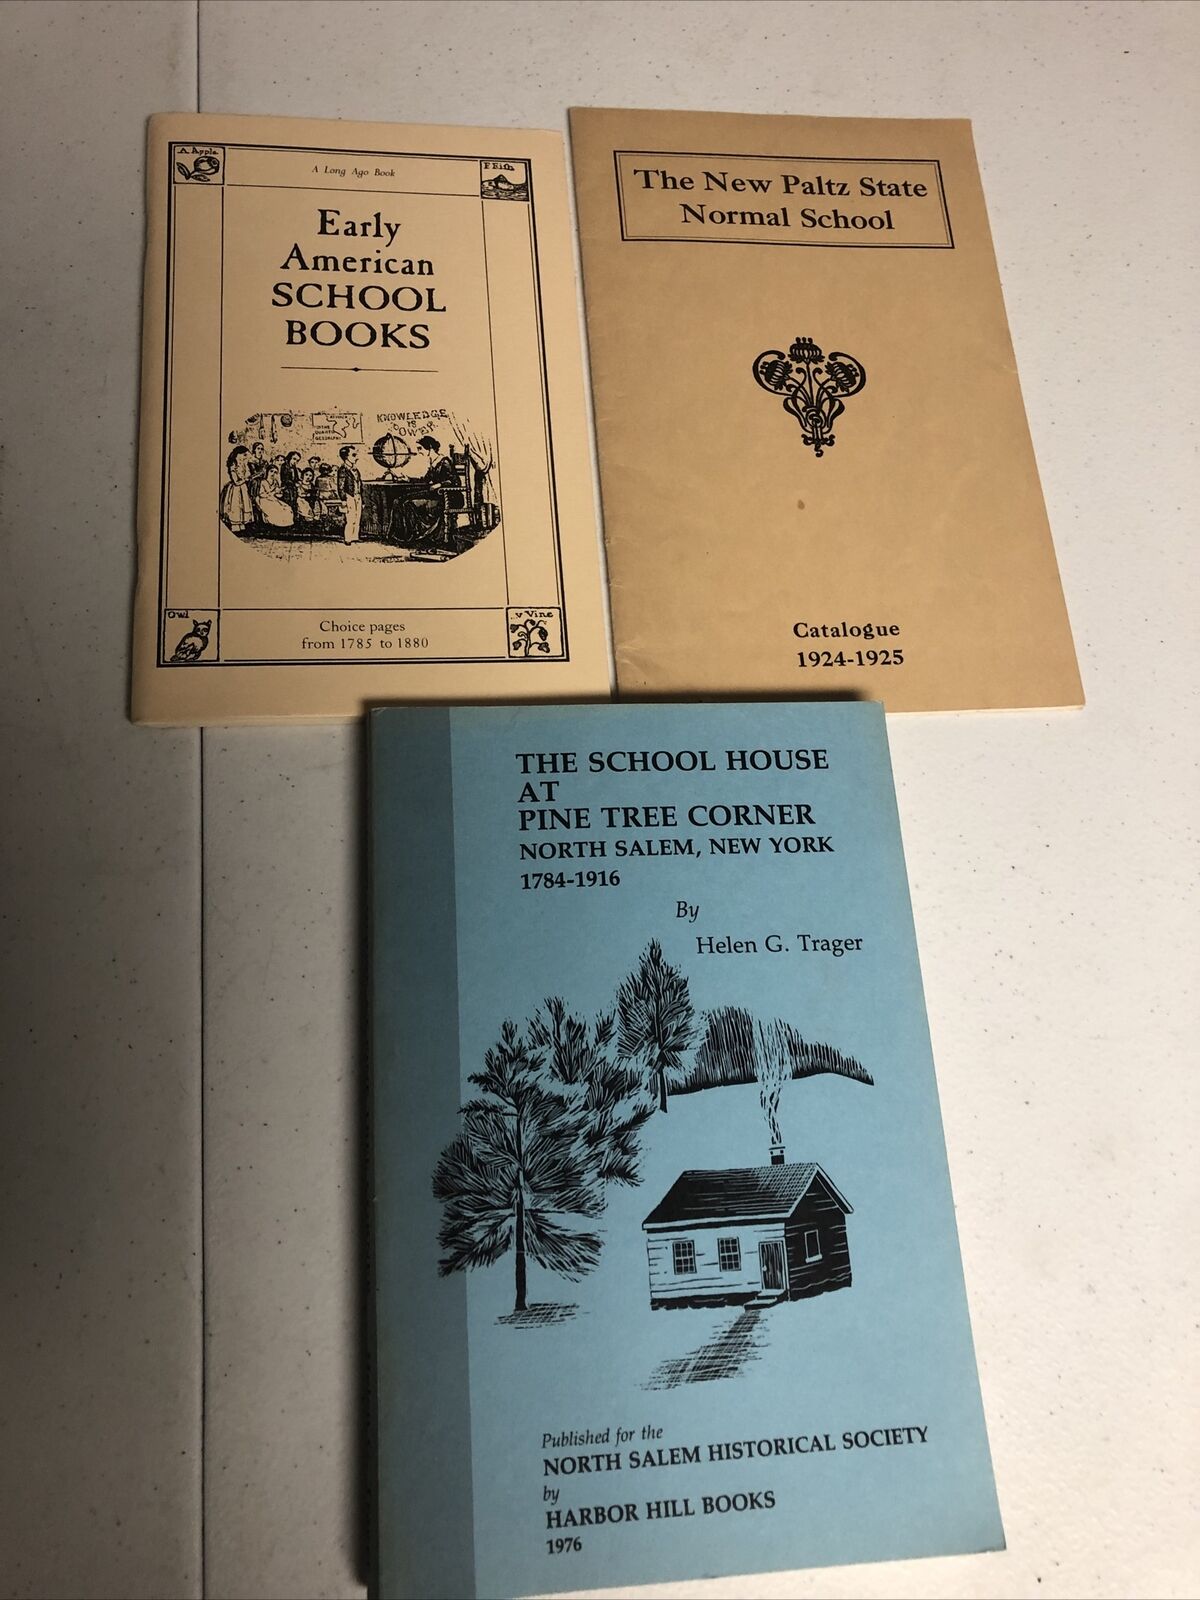 ANTIQUE 1920’S SCHOOL SOFTCOVER BOOKS. EXC COND